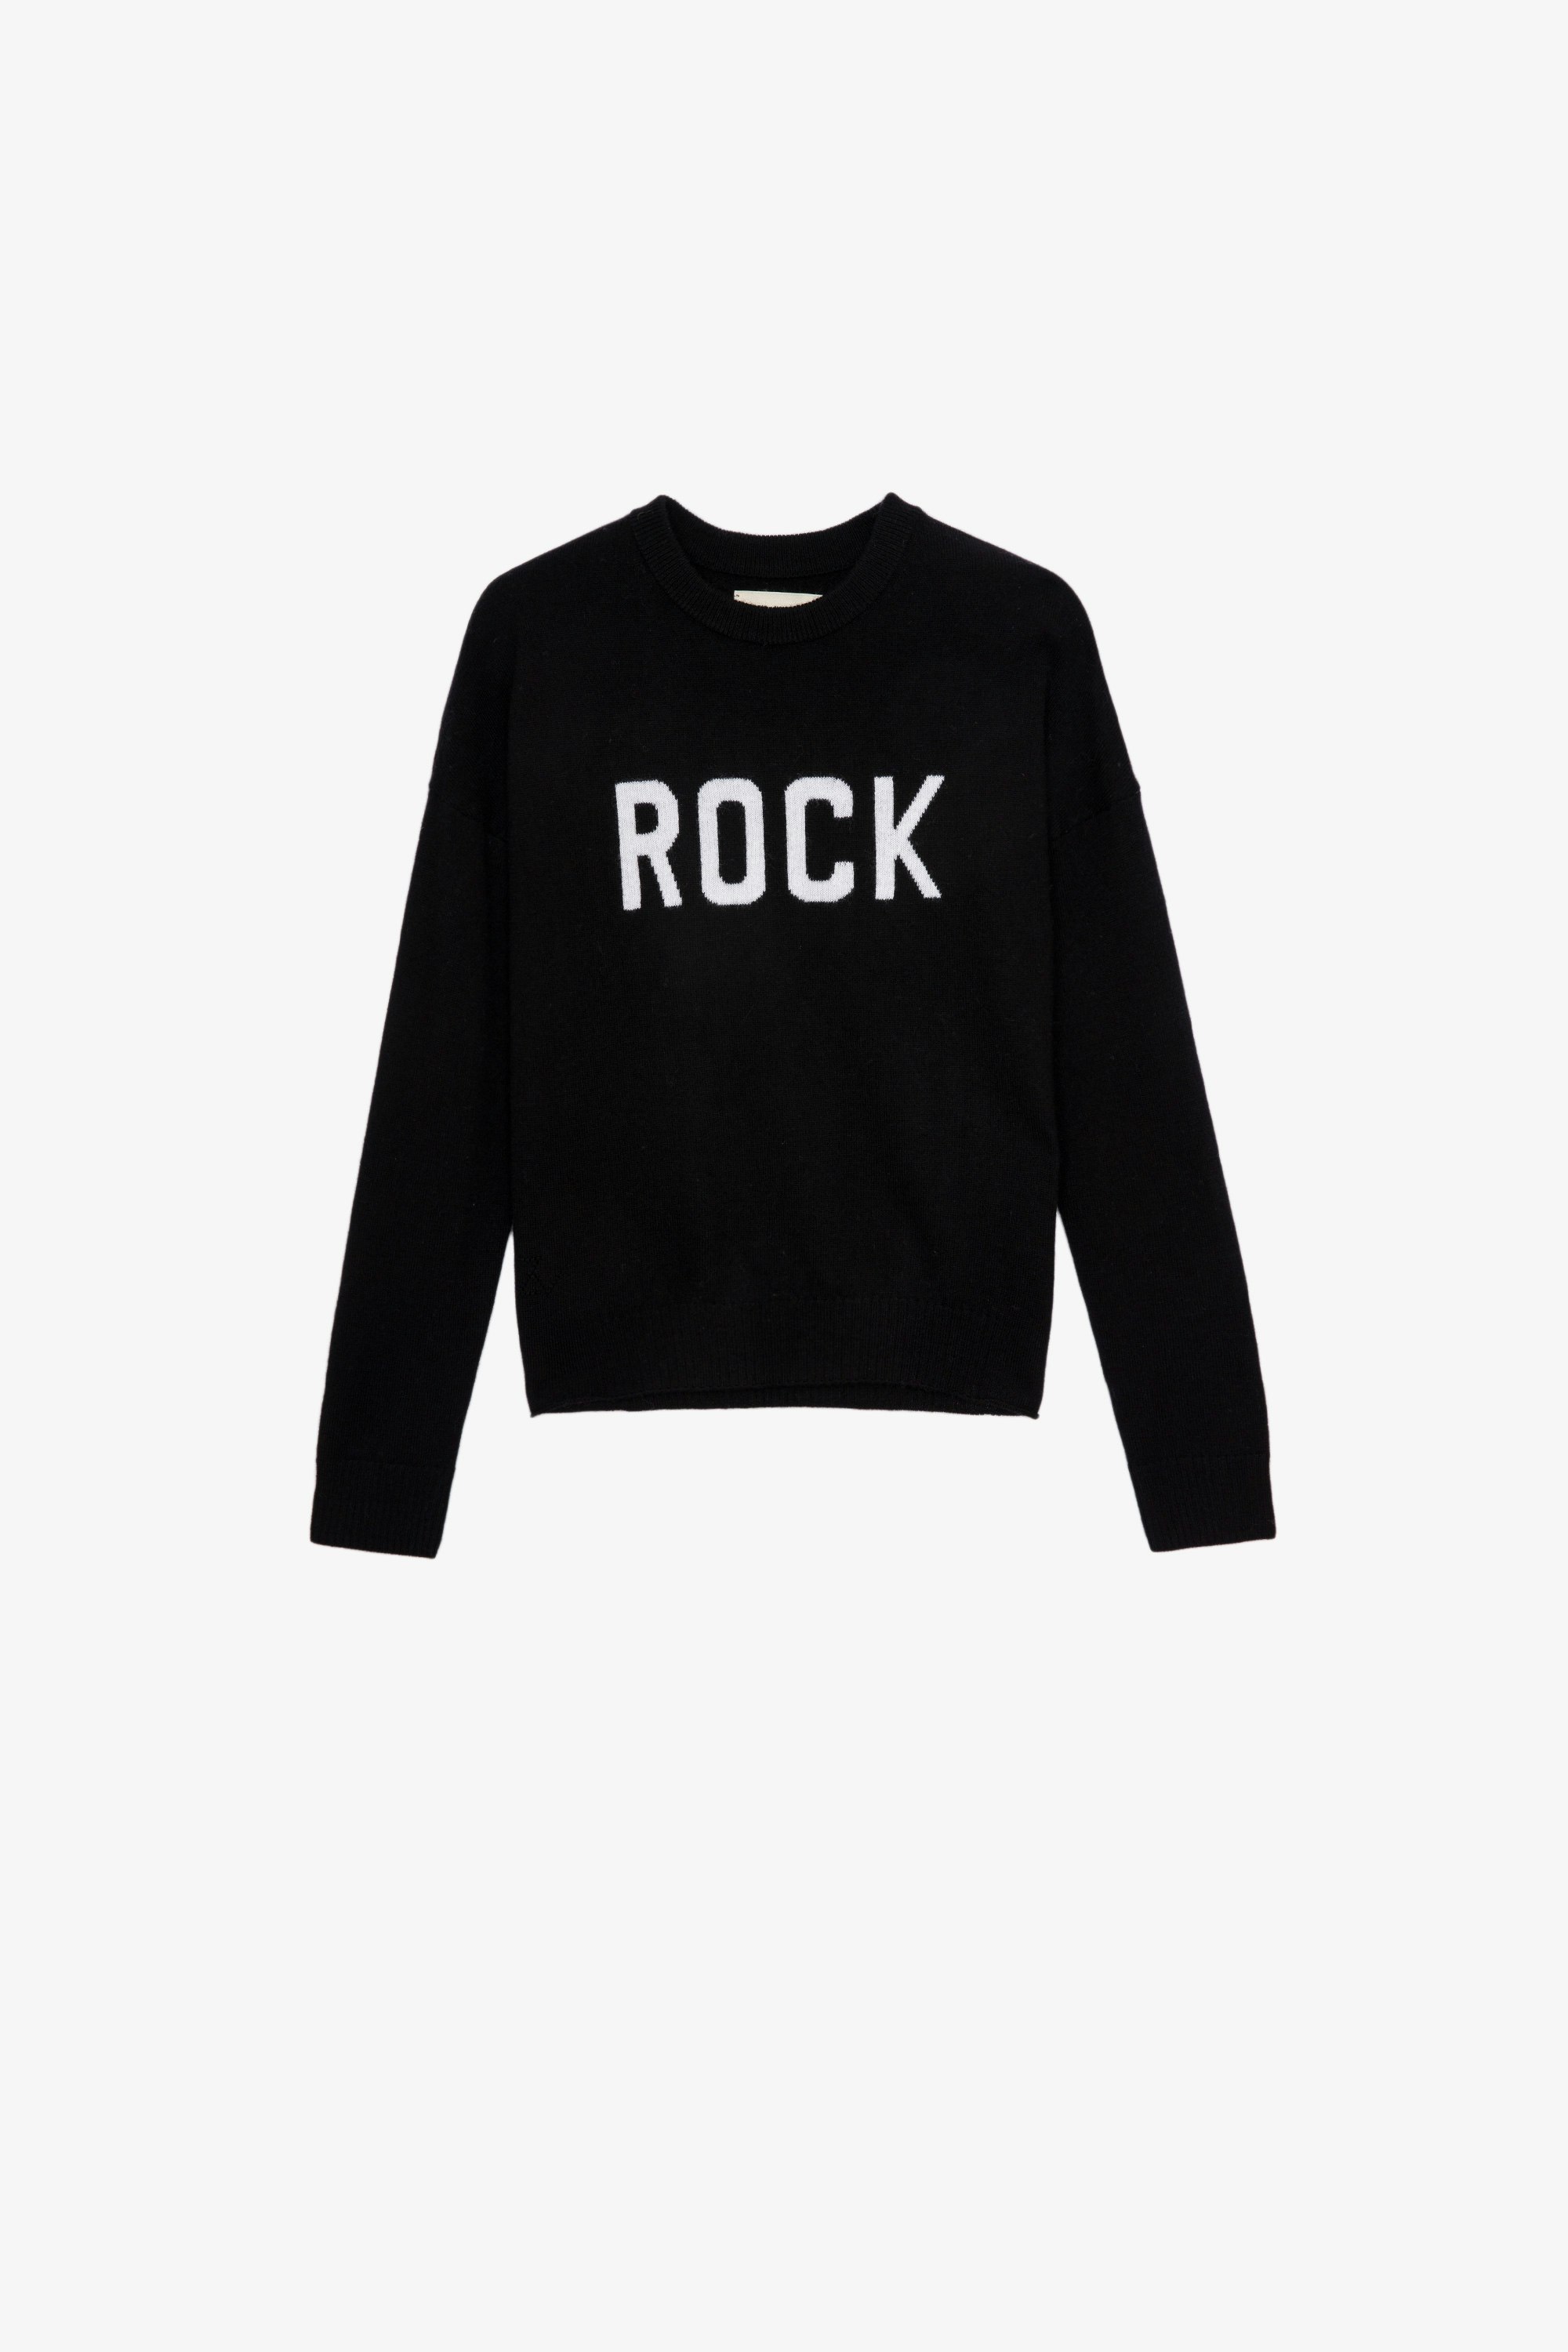 Drum Children’s Jumper Children’s black long-sleeve knitted jumper with “Rock” message 